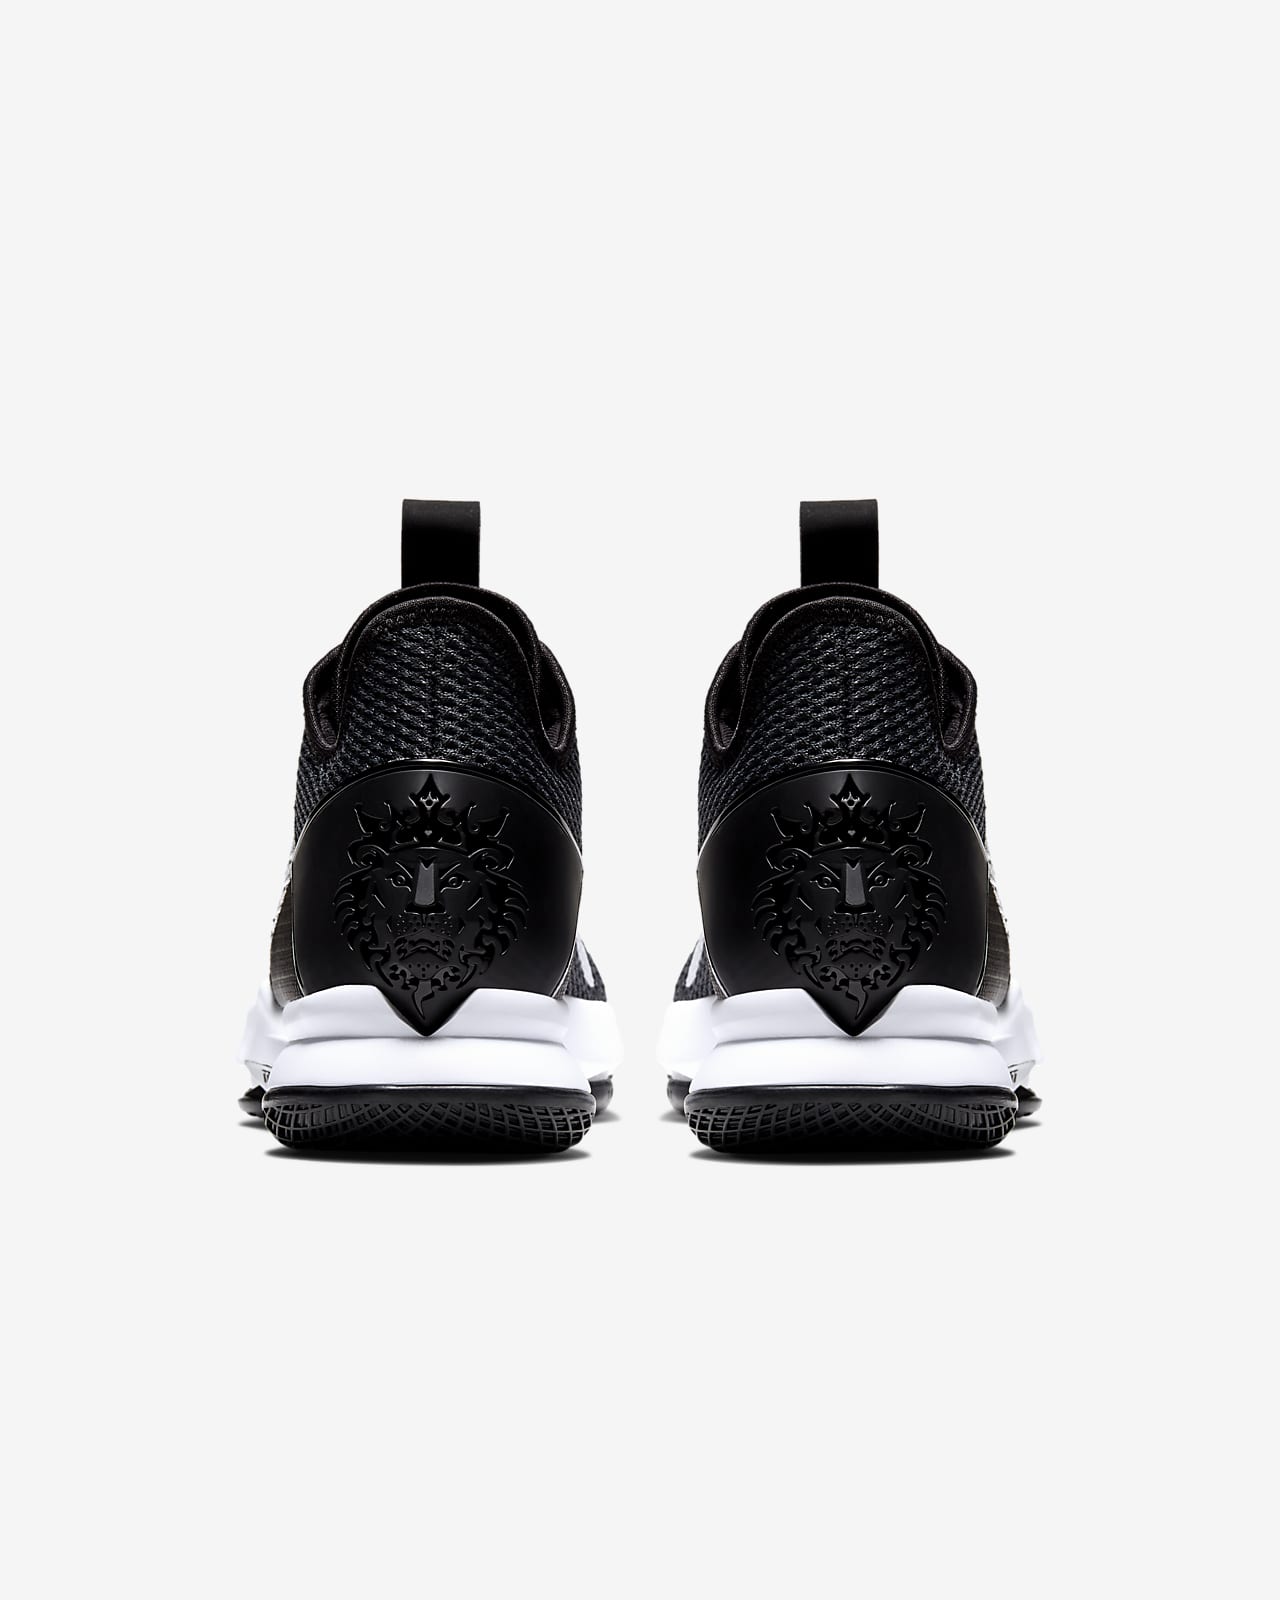 Sepatu Nike Kyrie 5 Patrick Star Quality Premium Shopee